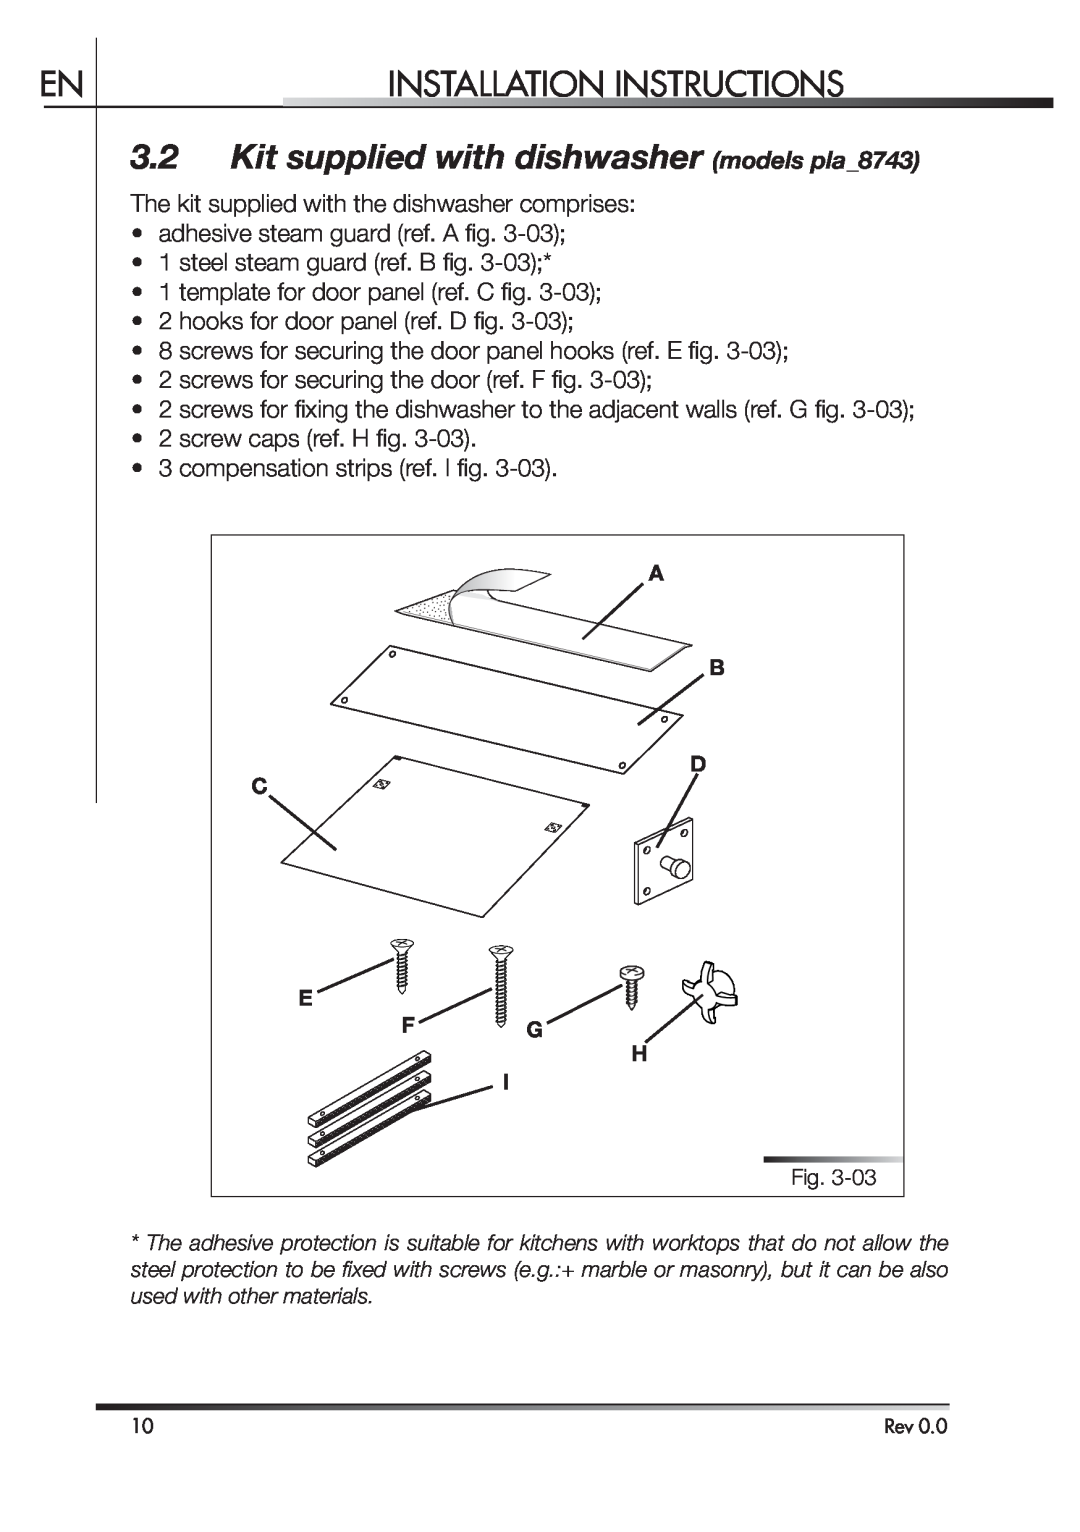 Smeg STA4645 instruction manual Kit supplied with dishwasher models pla8743, Installation Instructions, A B D E F G H I 